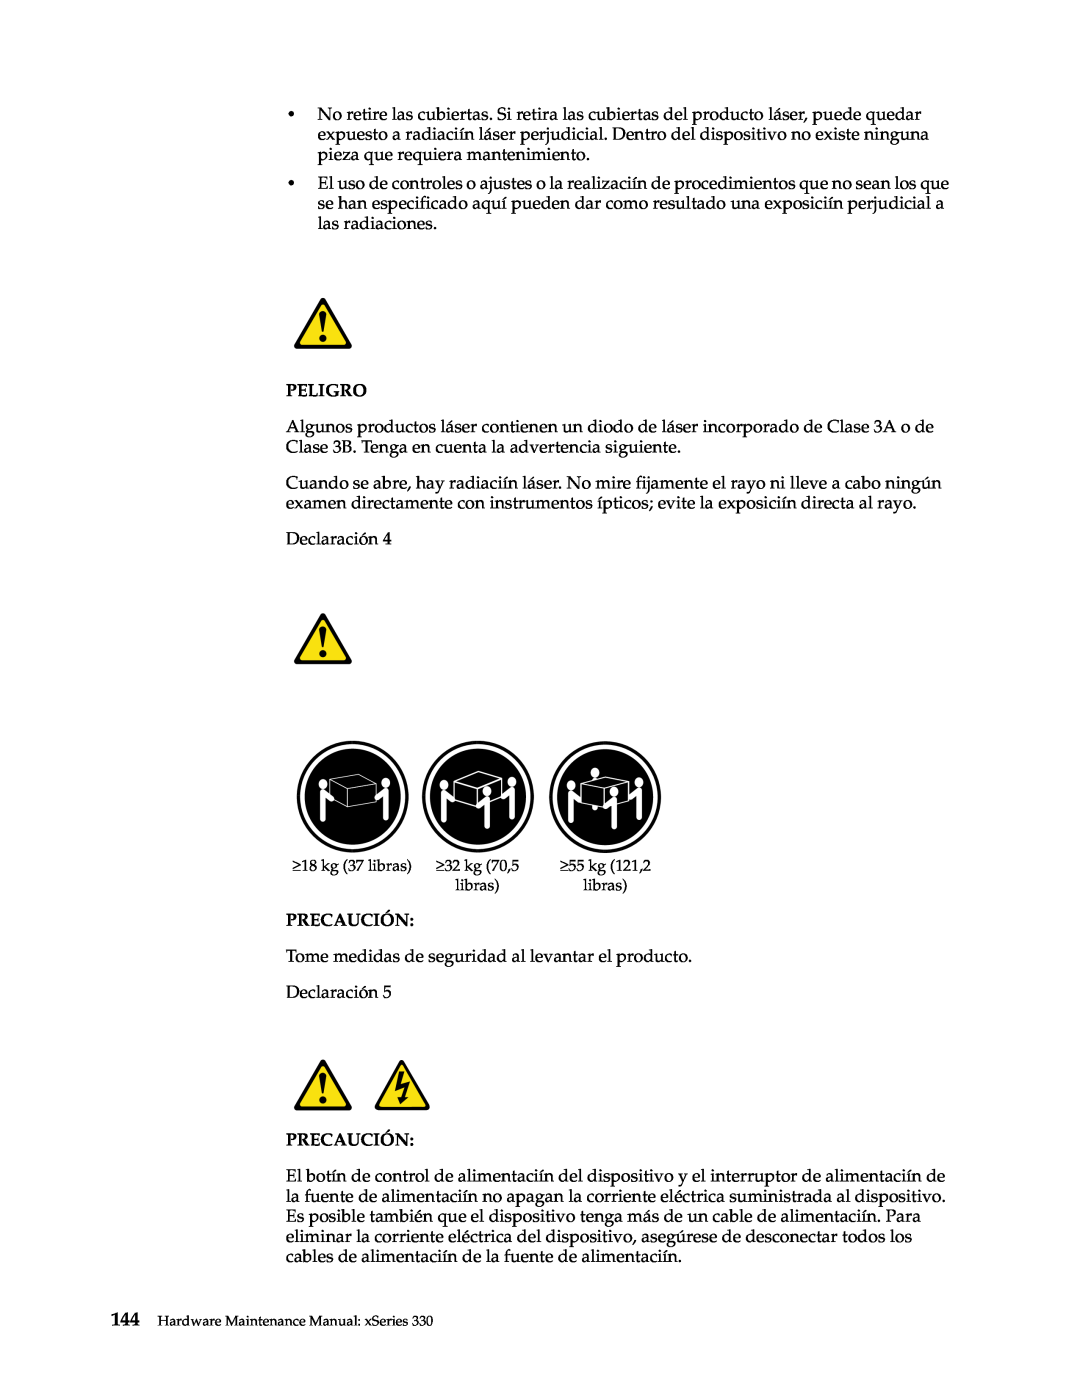 IBM xSeries 330 manual Peligro, Declaración, Precaución 